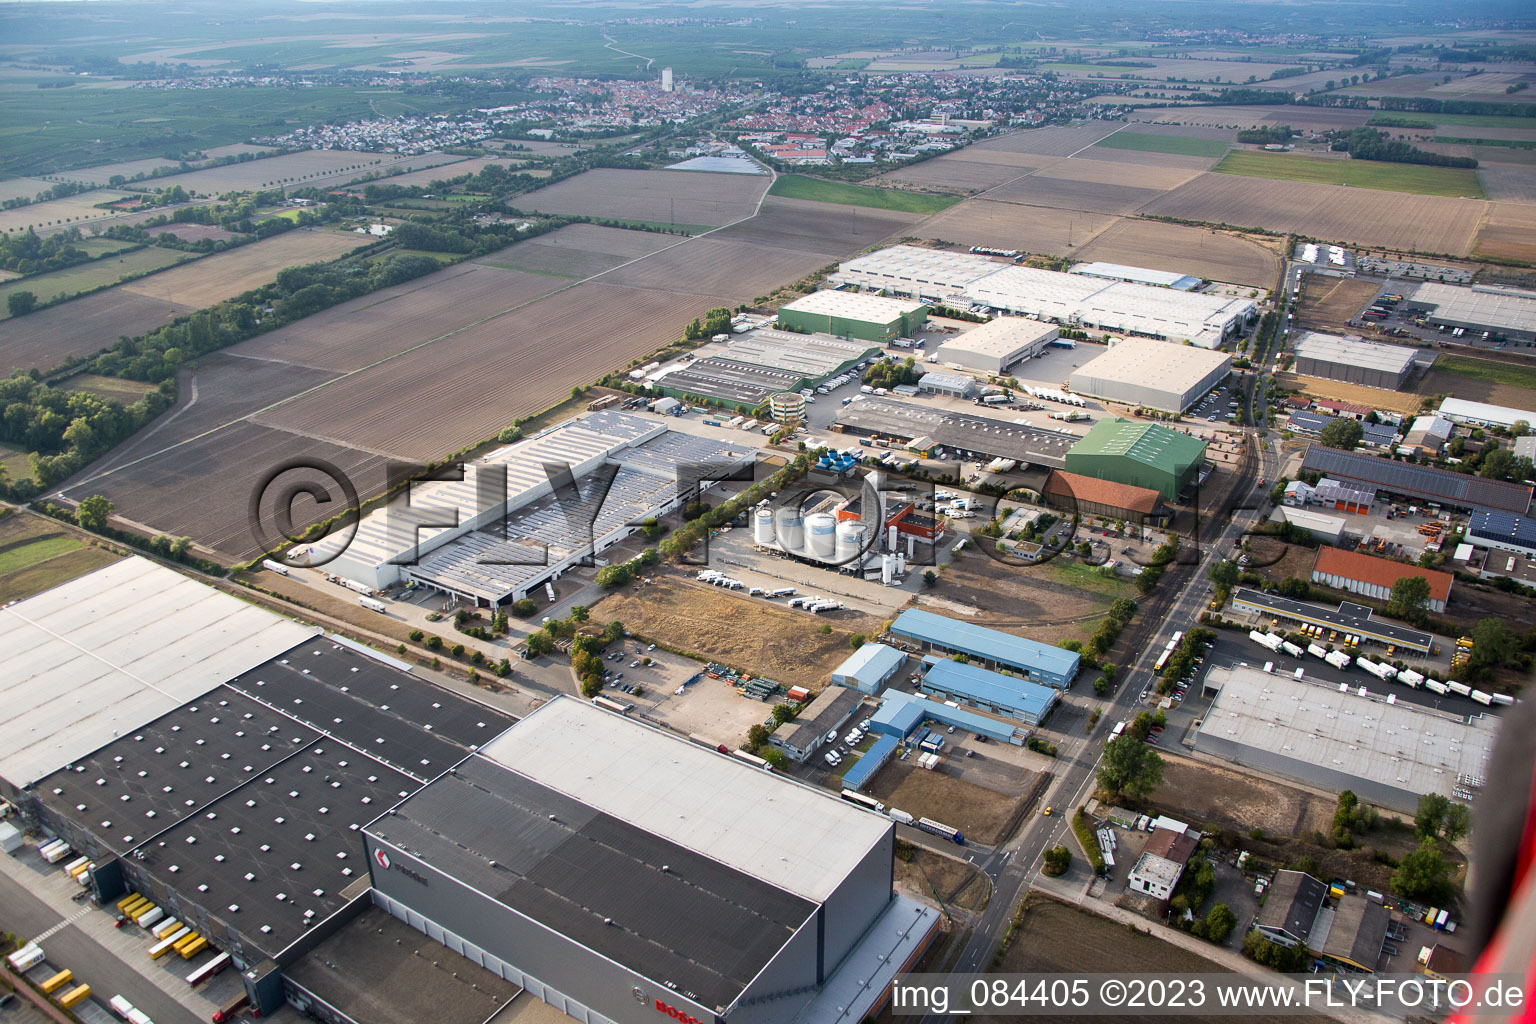 Aerial view of Bosch in the district Rheindürkheim in Worms in the state Rhineland-Palatinate, Germany